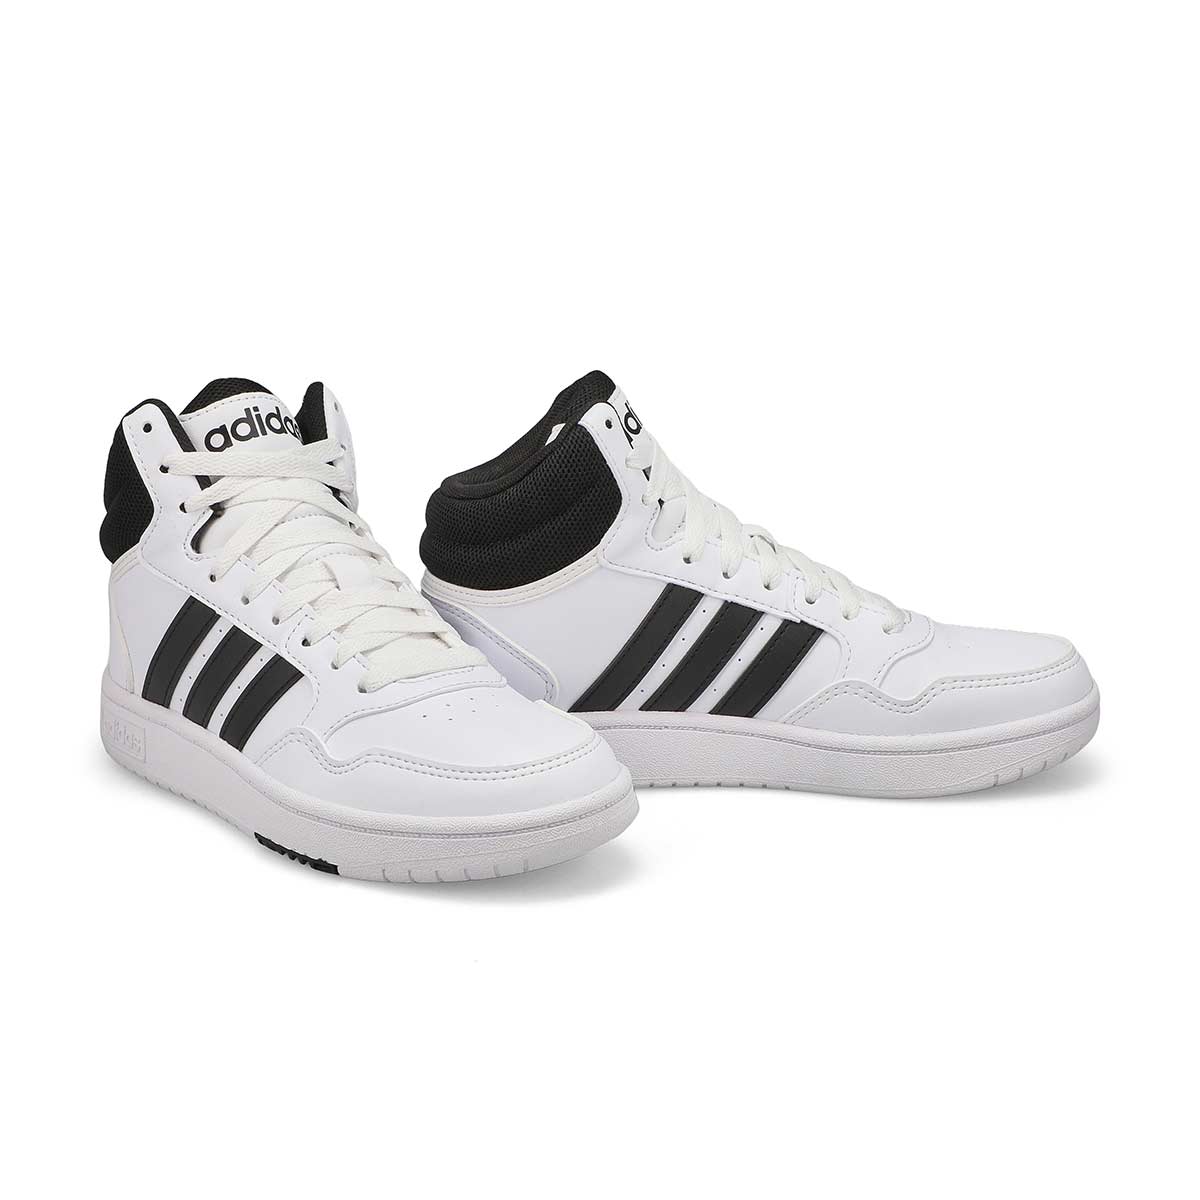 Kds Hoops Mid 3.0 K Sneaker - White/Black